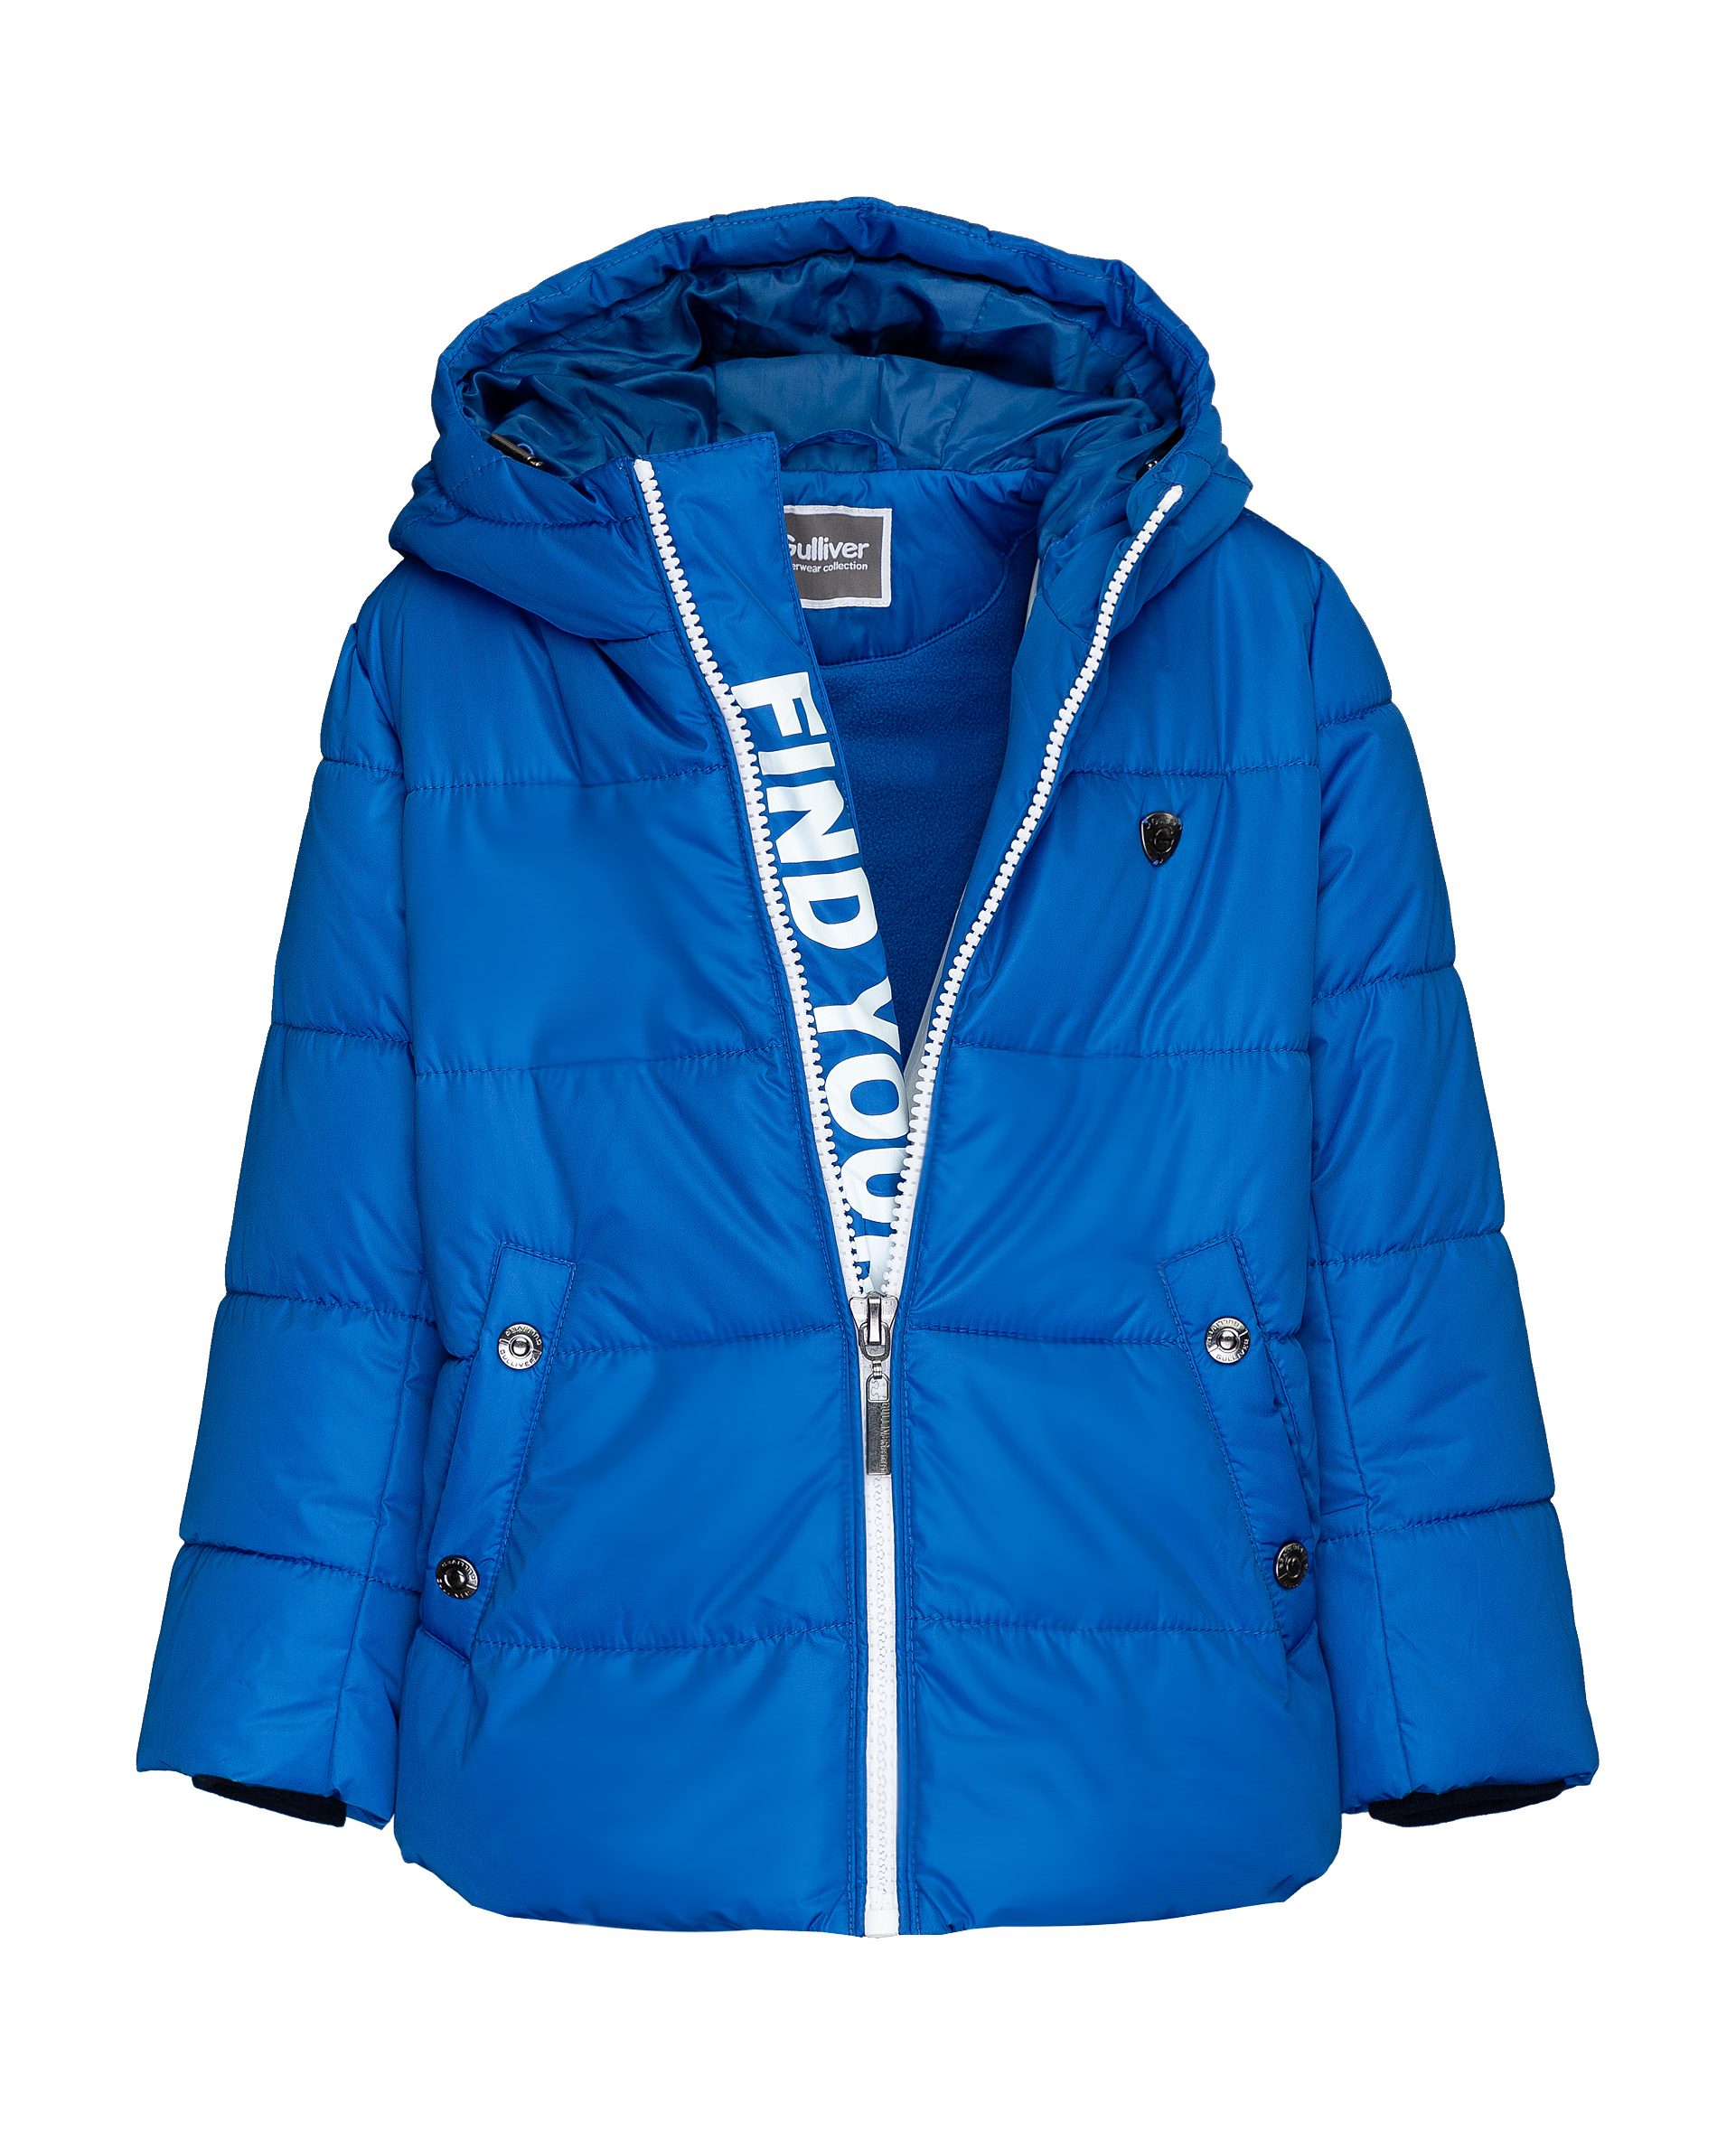 Синяя зимняя куртка Gulliver 21906BMC4102, размер 98, цвет синий - фото 4